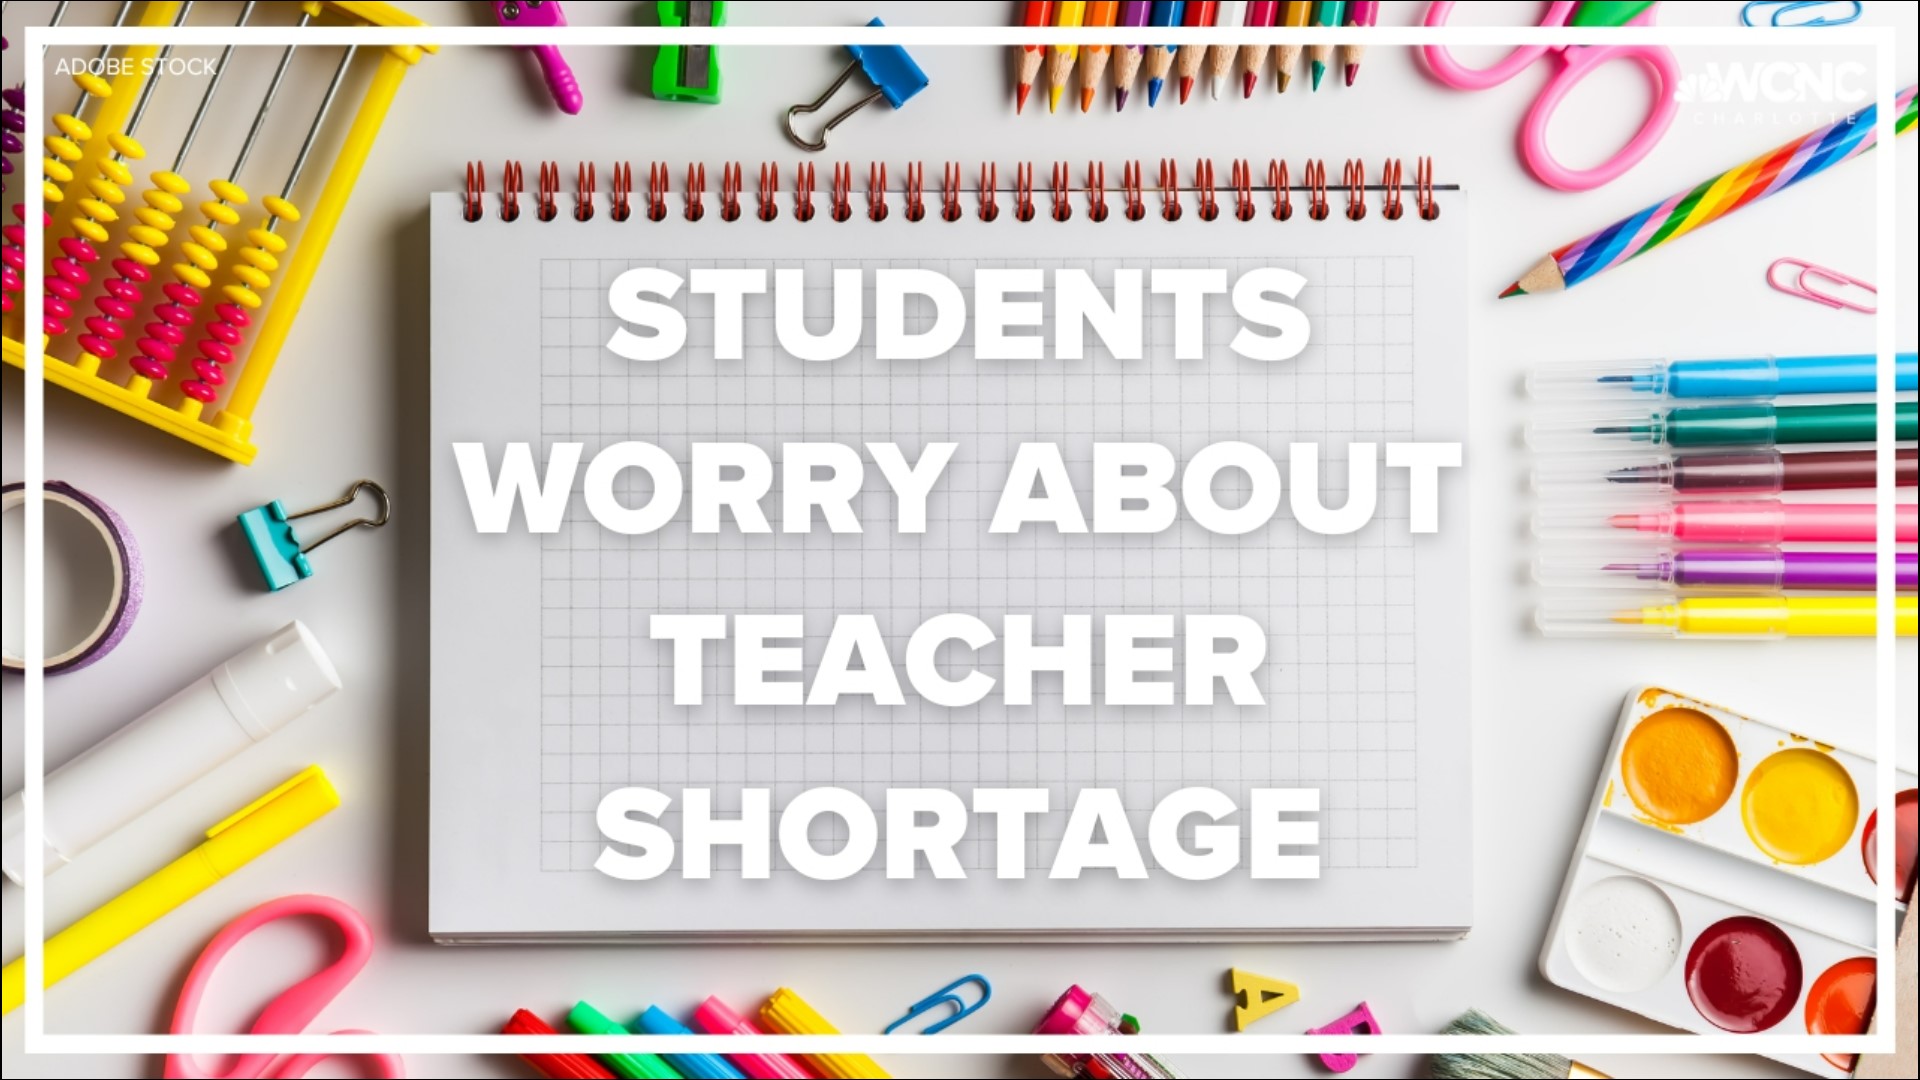 Students express concerns over teacher shortage.